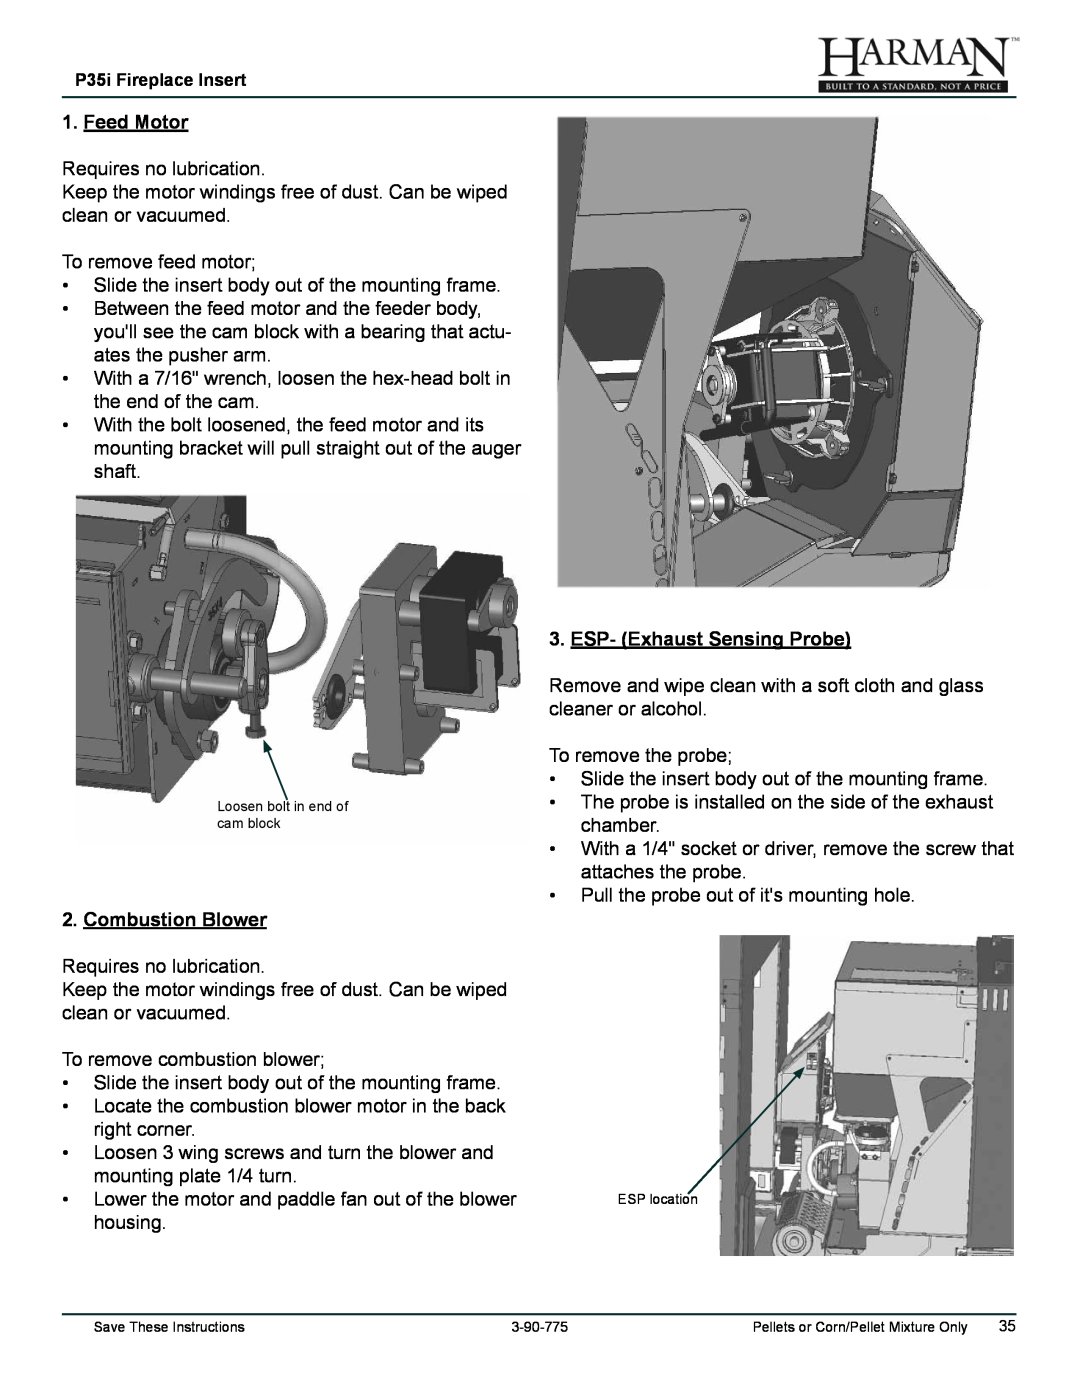 Harman Stove Company P35I owner manual Feed Motor, Combustion Blower, ESP- Exhaust Sensing Probe 